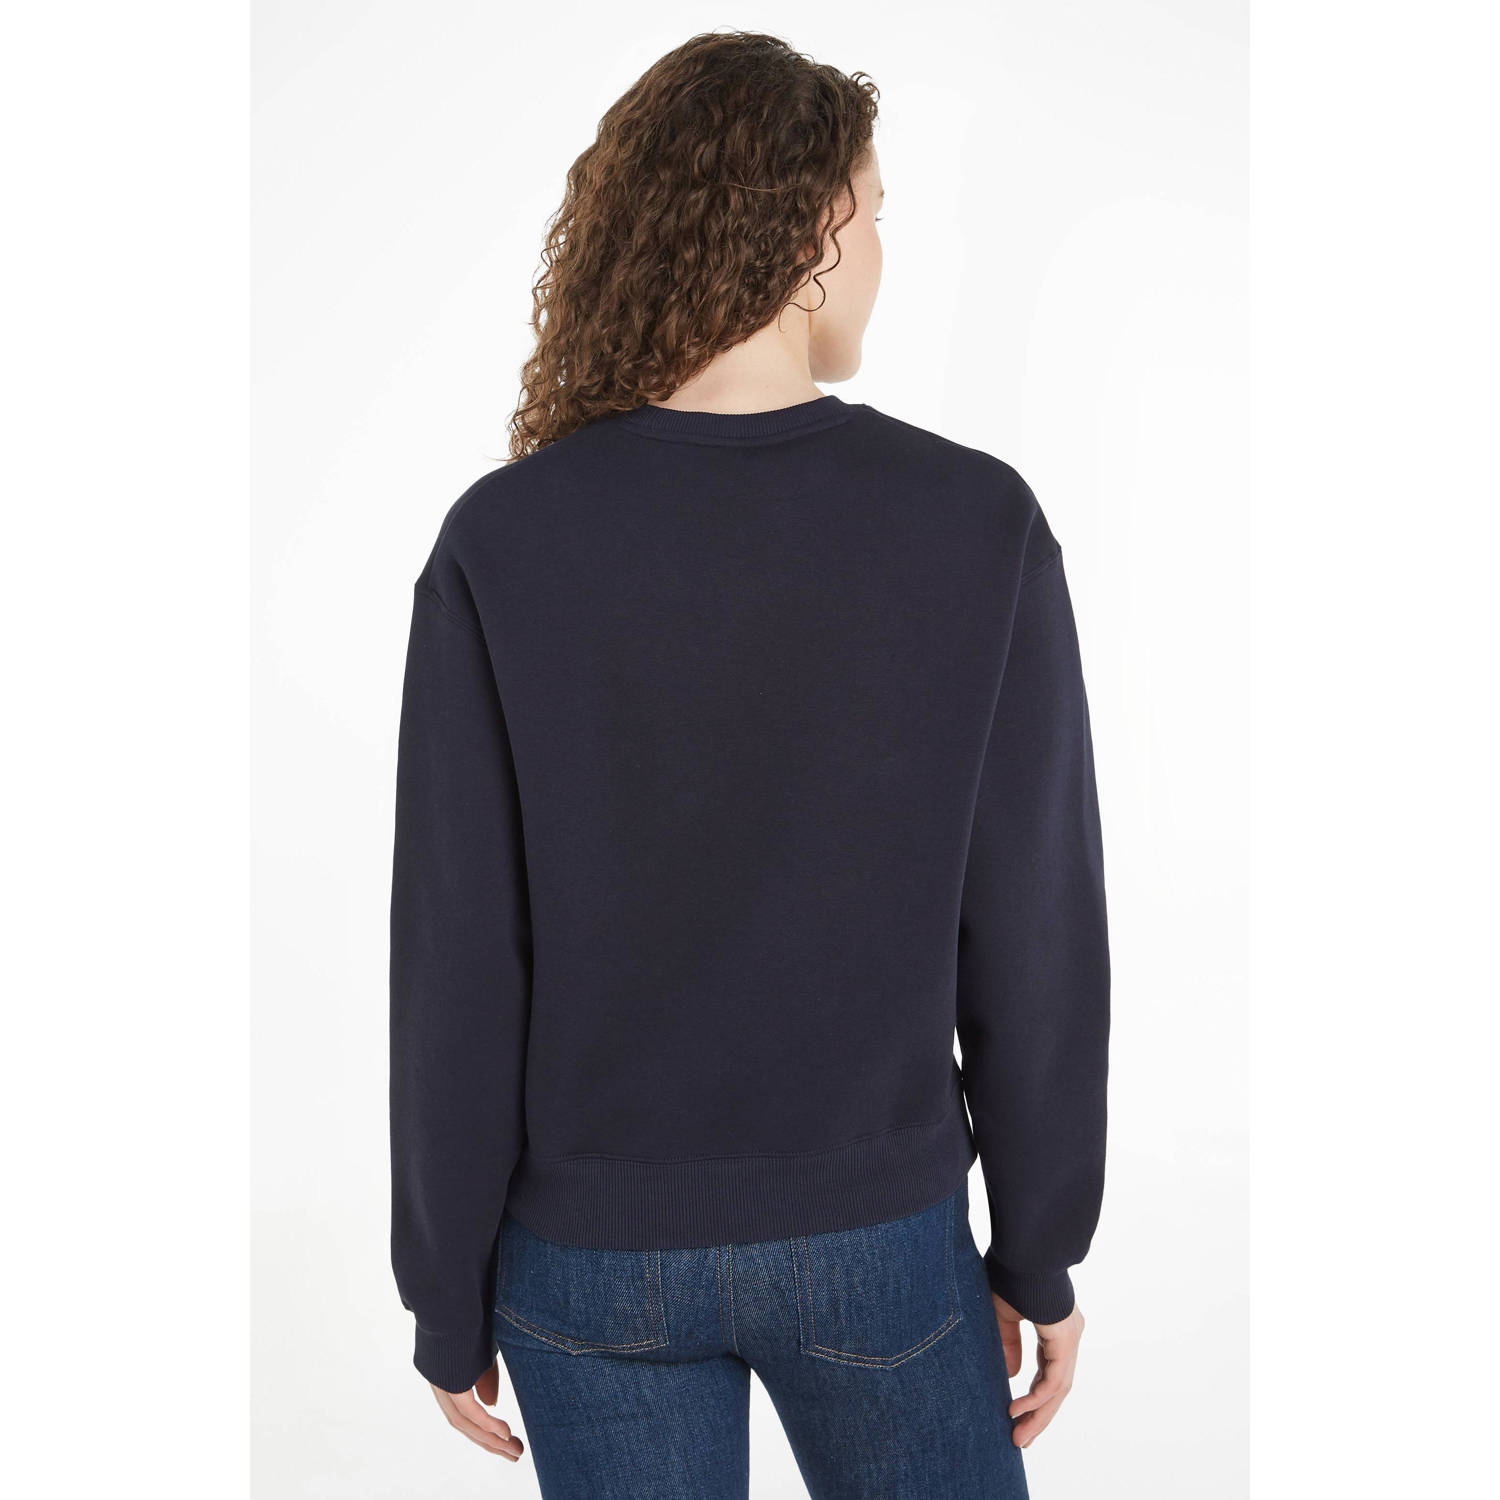 Tommy Hilfiger sweater met logo donkerblauw